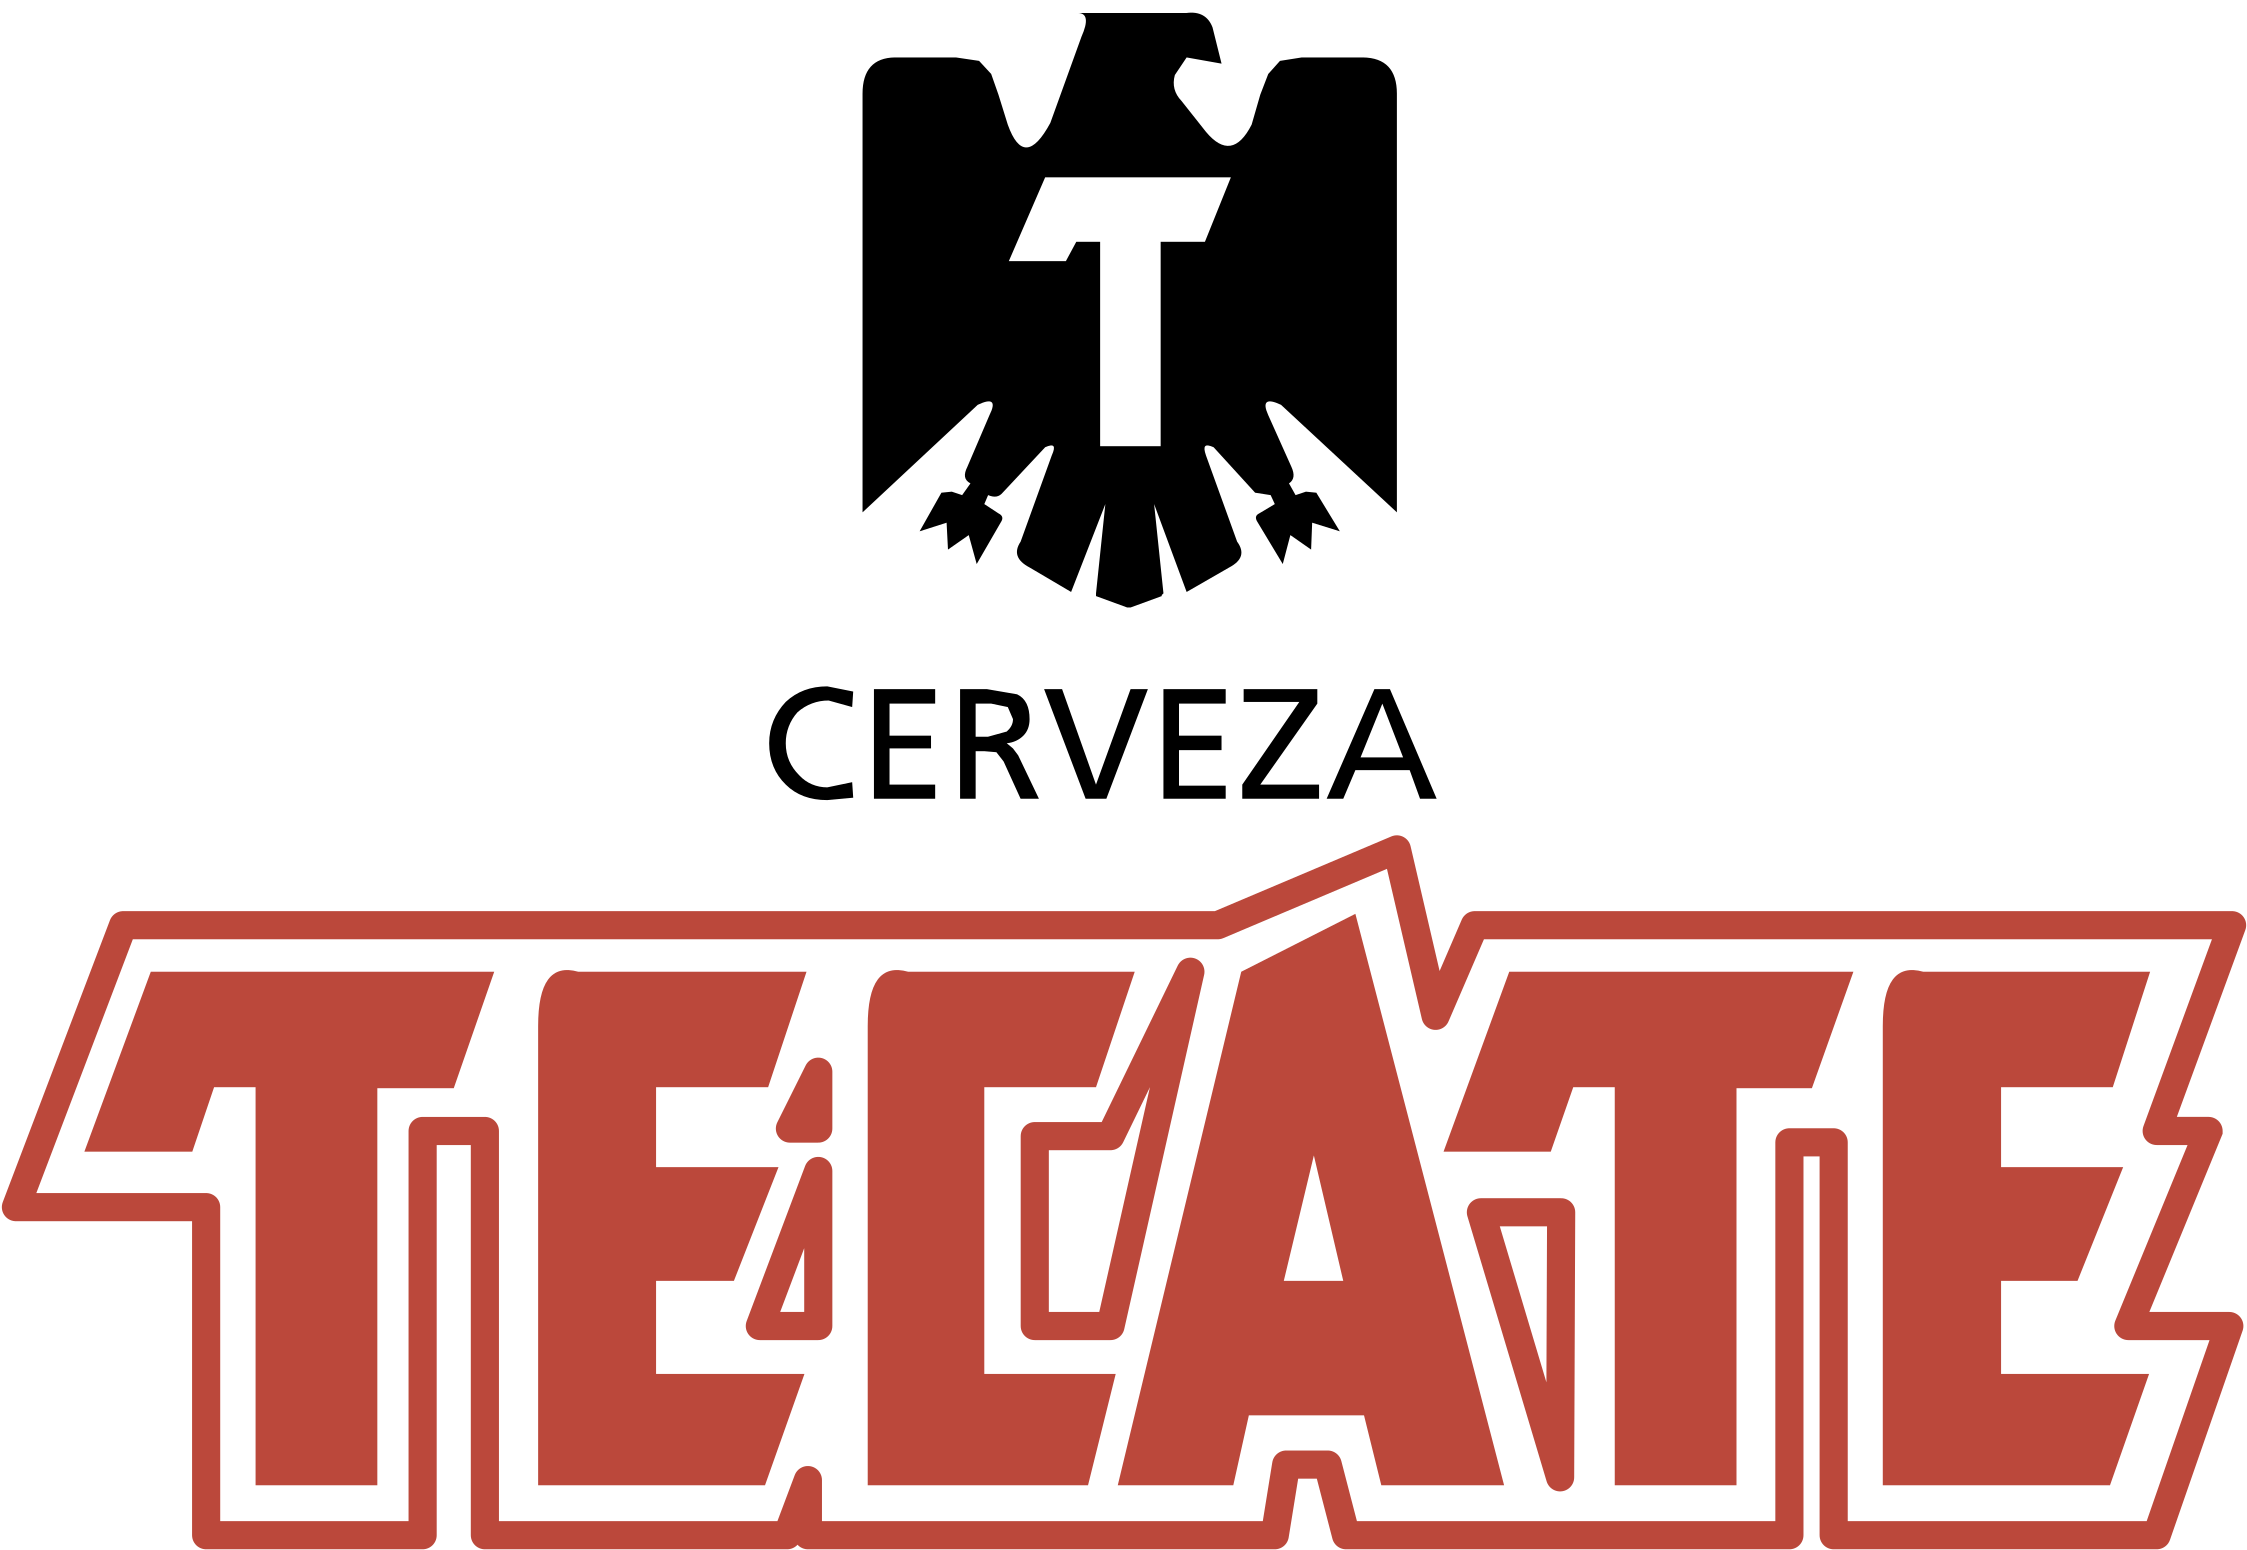 Download Tecate Logo Png Transparent.